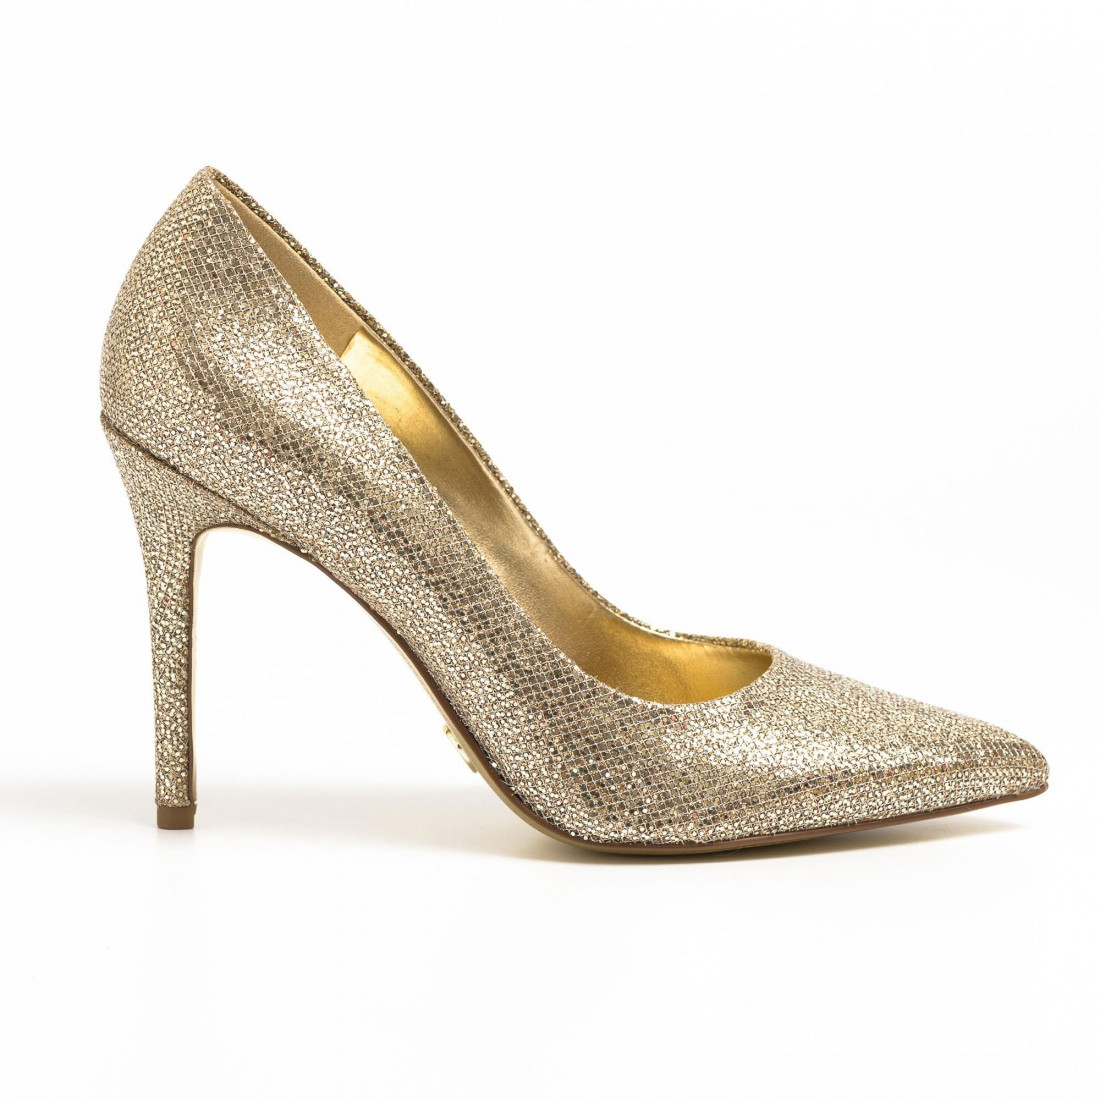 michael kors silver glitter shoes